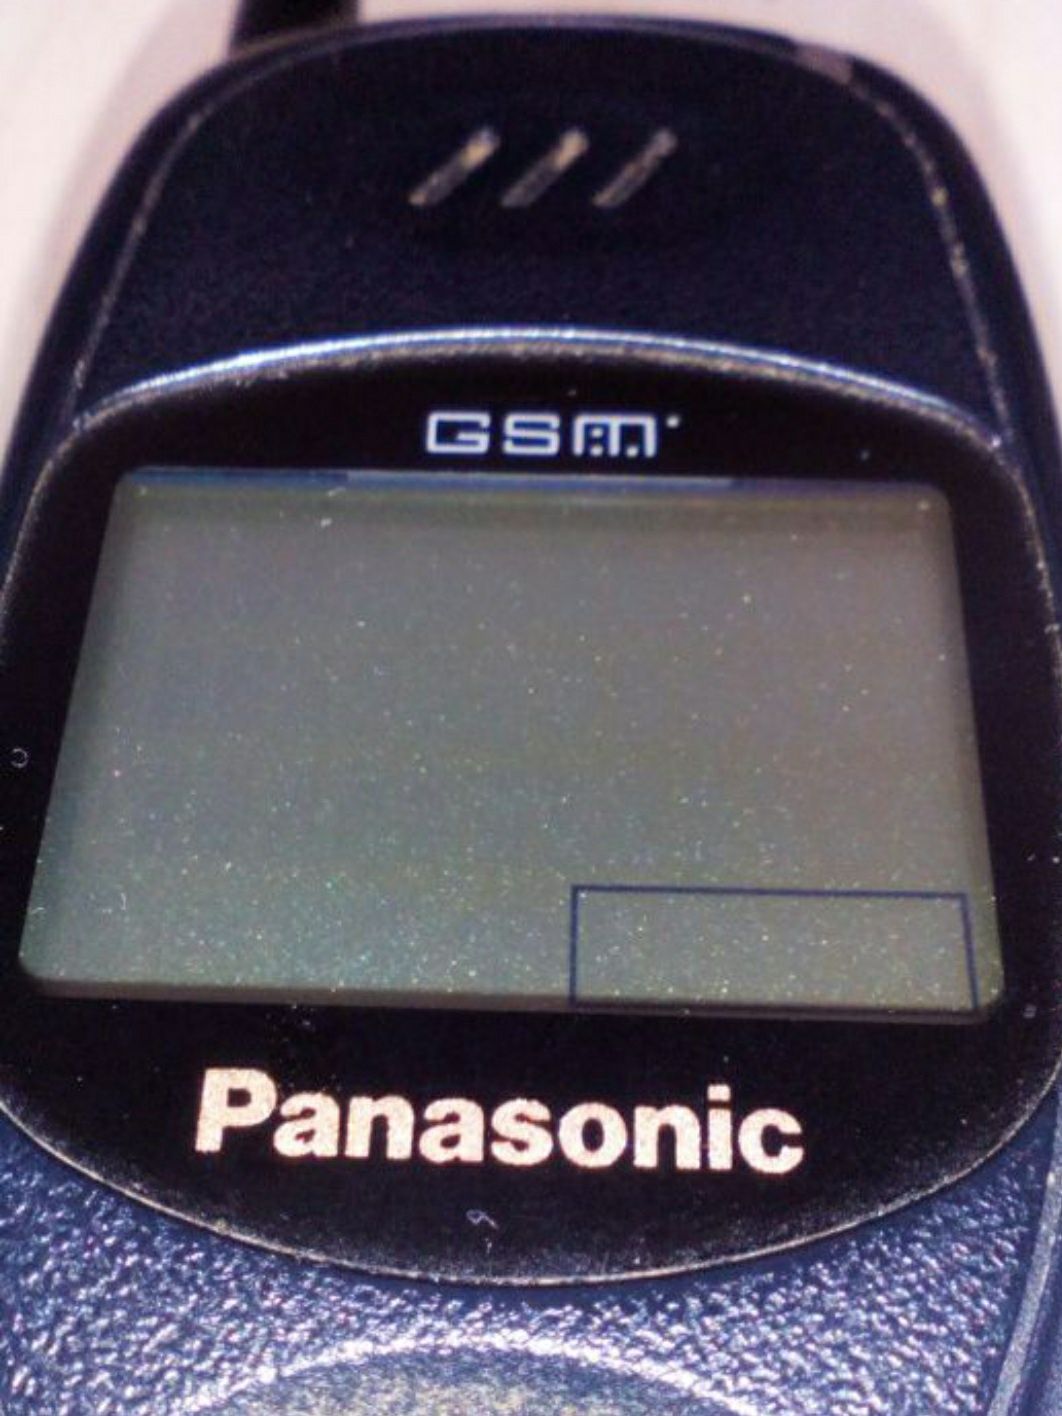 Telemóvel Vintage: Panasonic GSM.